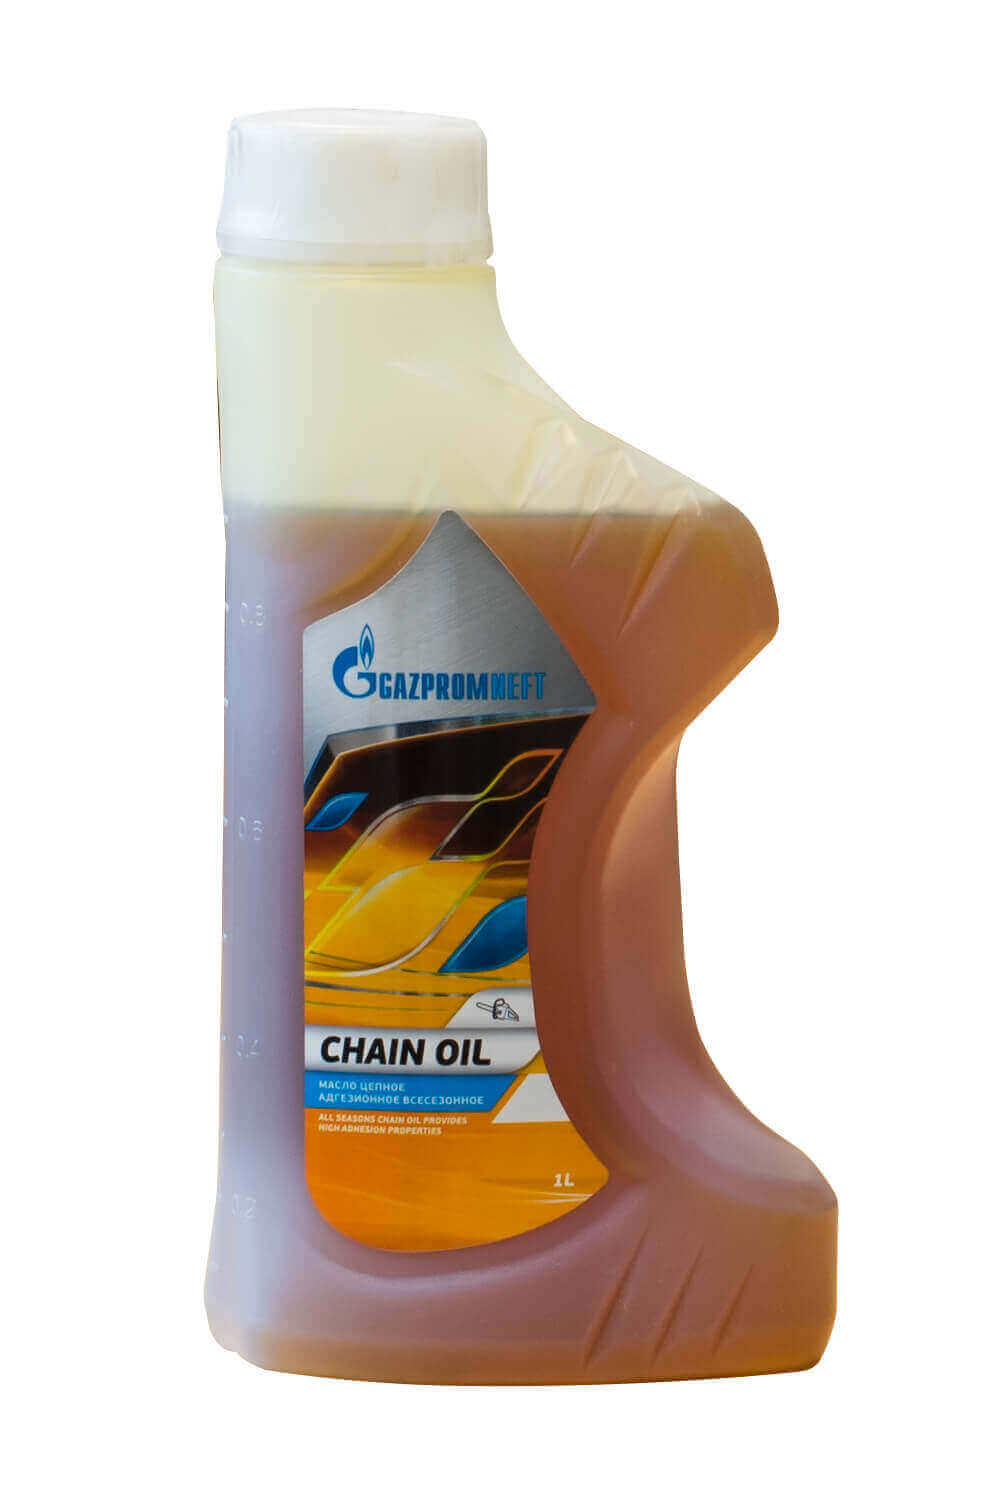 Gazpromneft Chain Oil